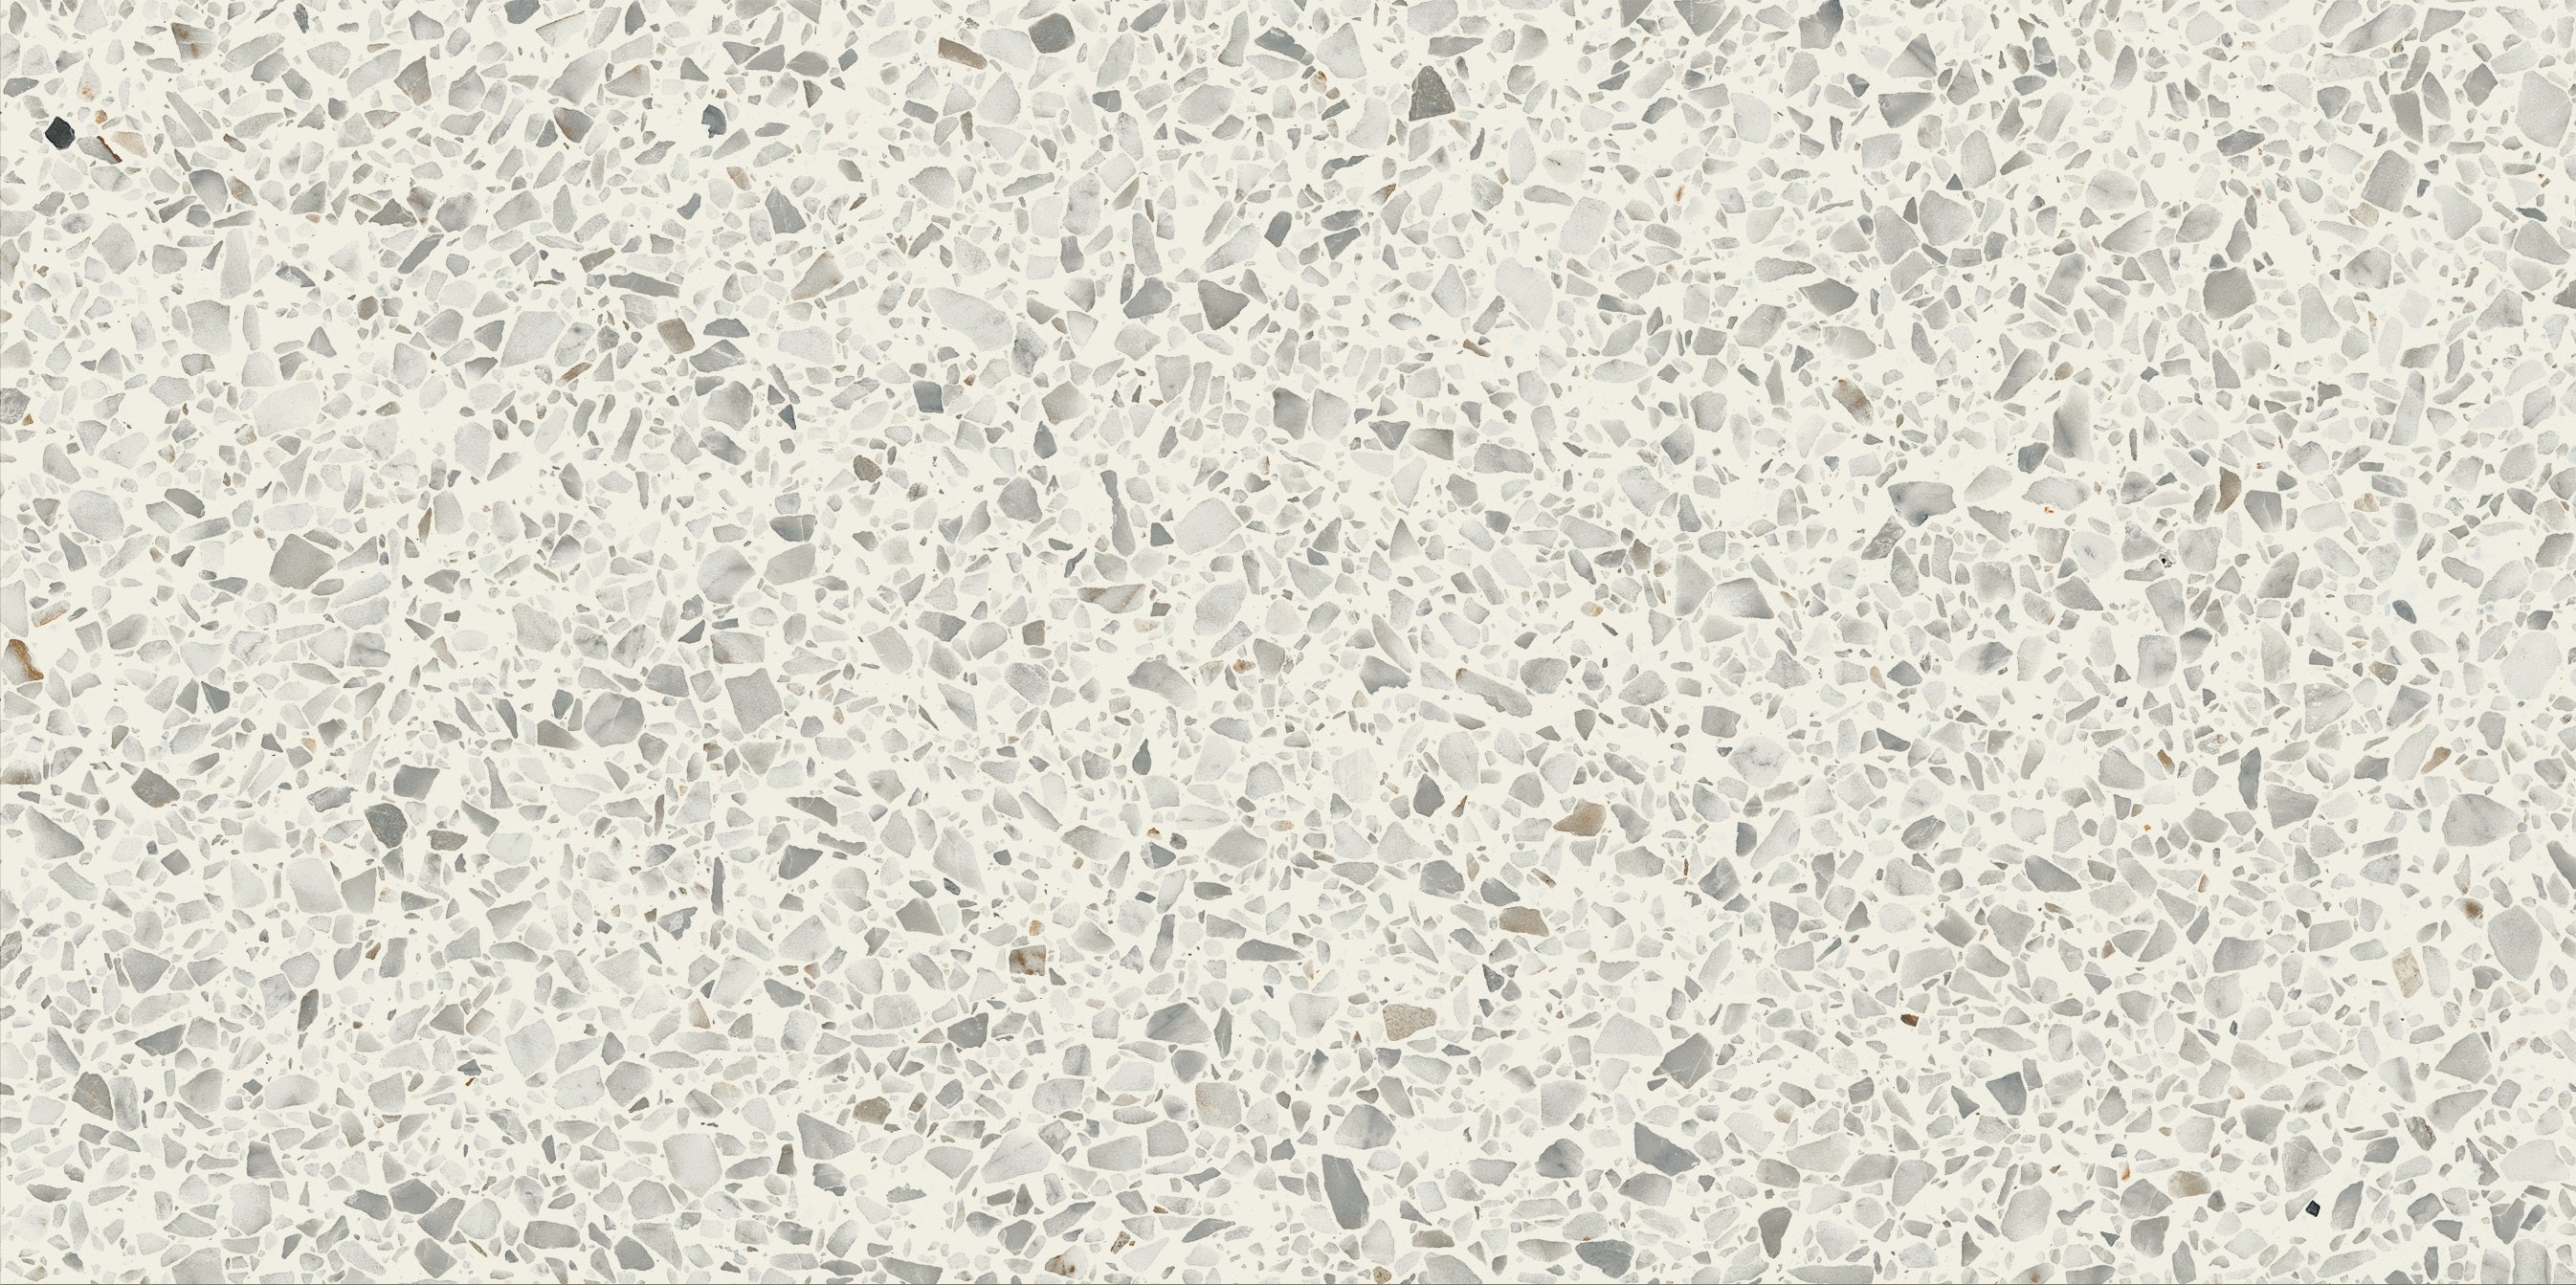 landmark 9mm elite diamond white field tile 12x24x9mm matte rectified porcelain tile distributed by surface group international